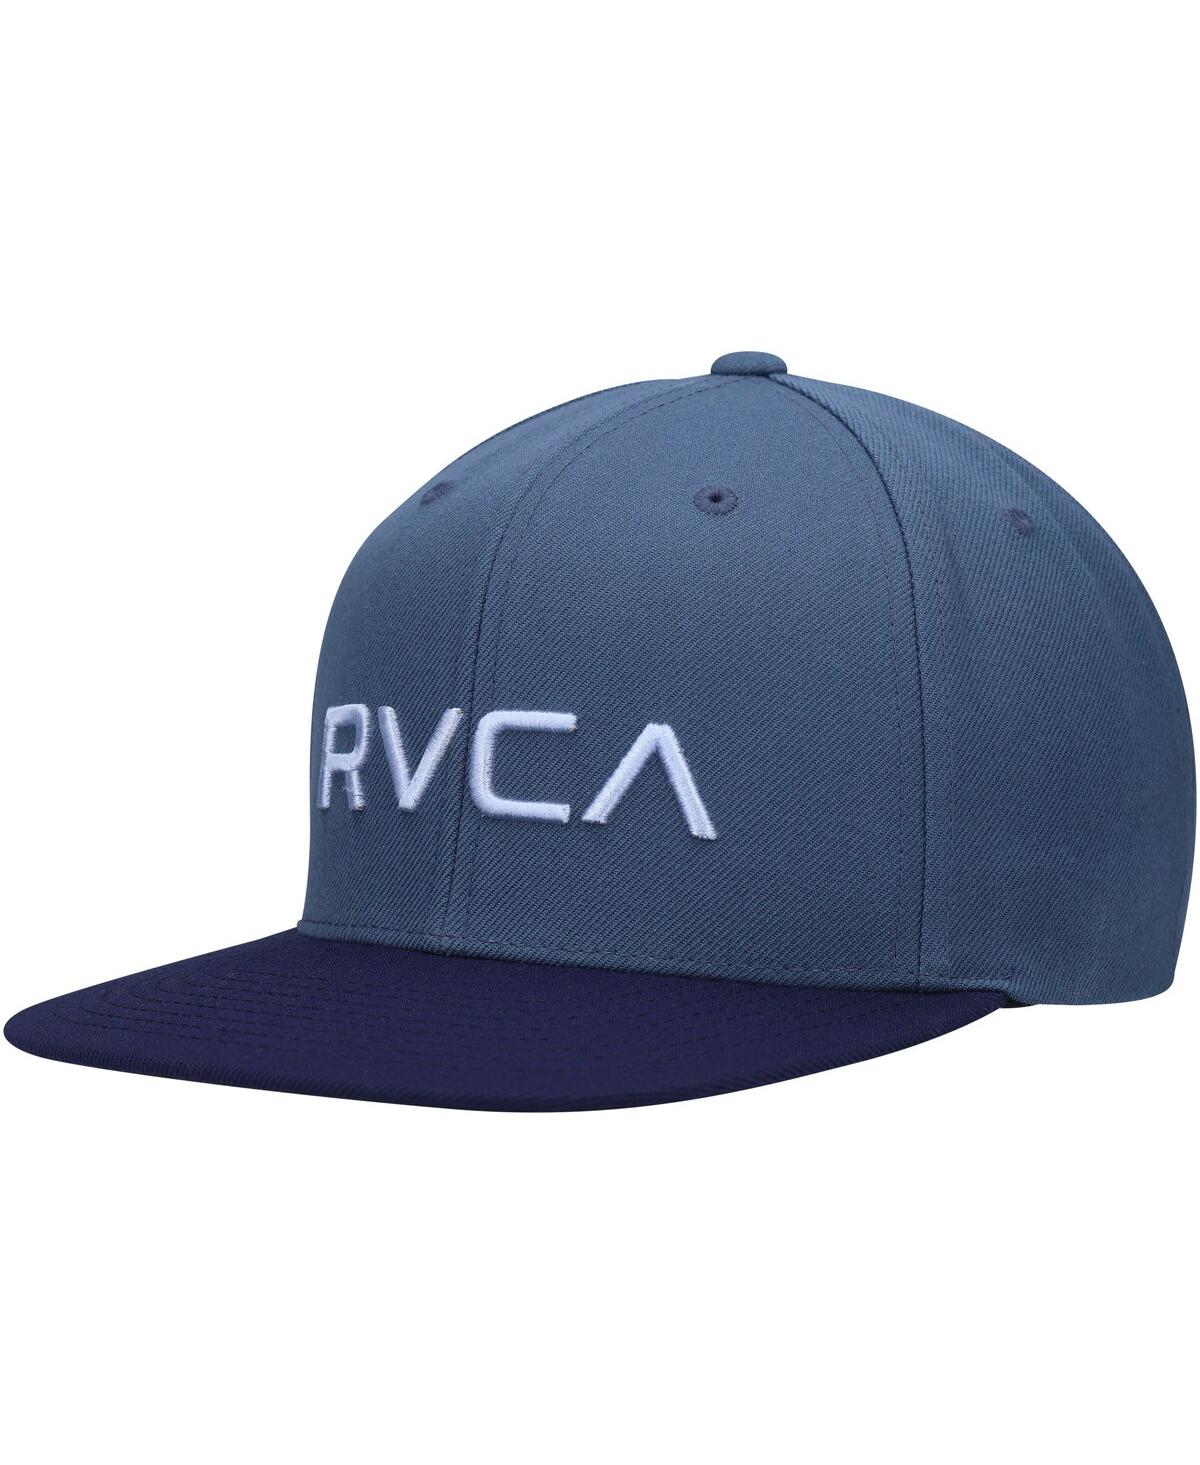 Men's Rvca Blue and Navy Twill Ii Snapback Hat - Blue, Navy